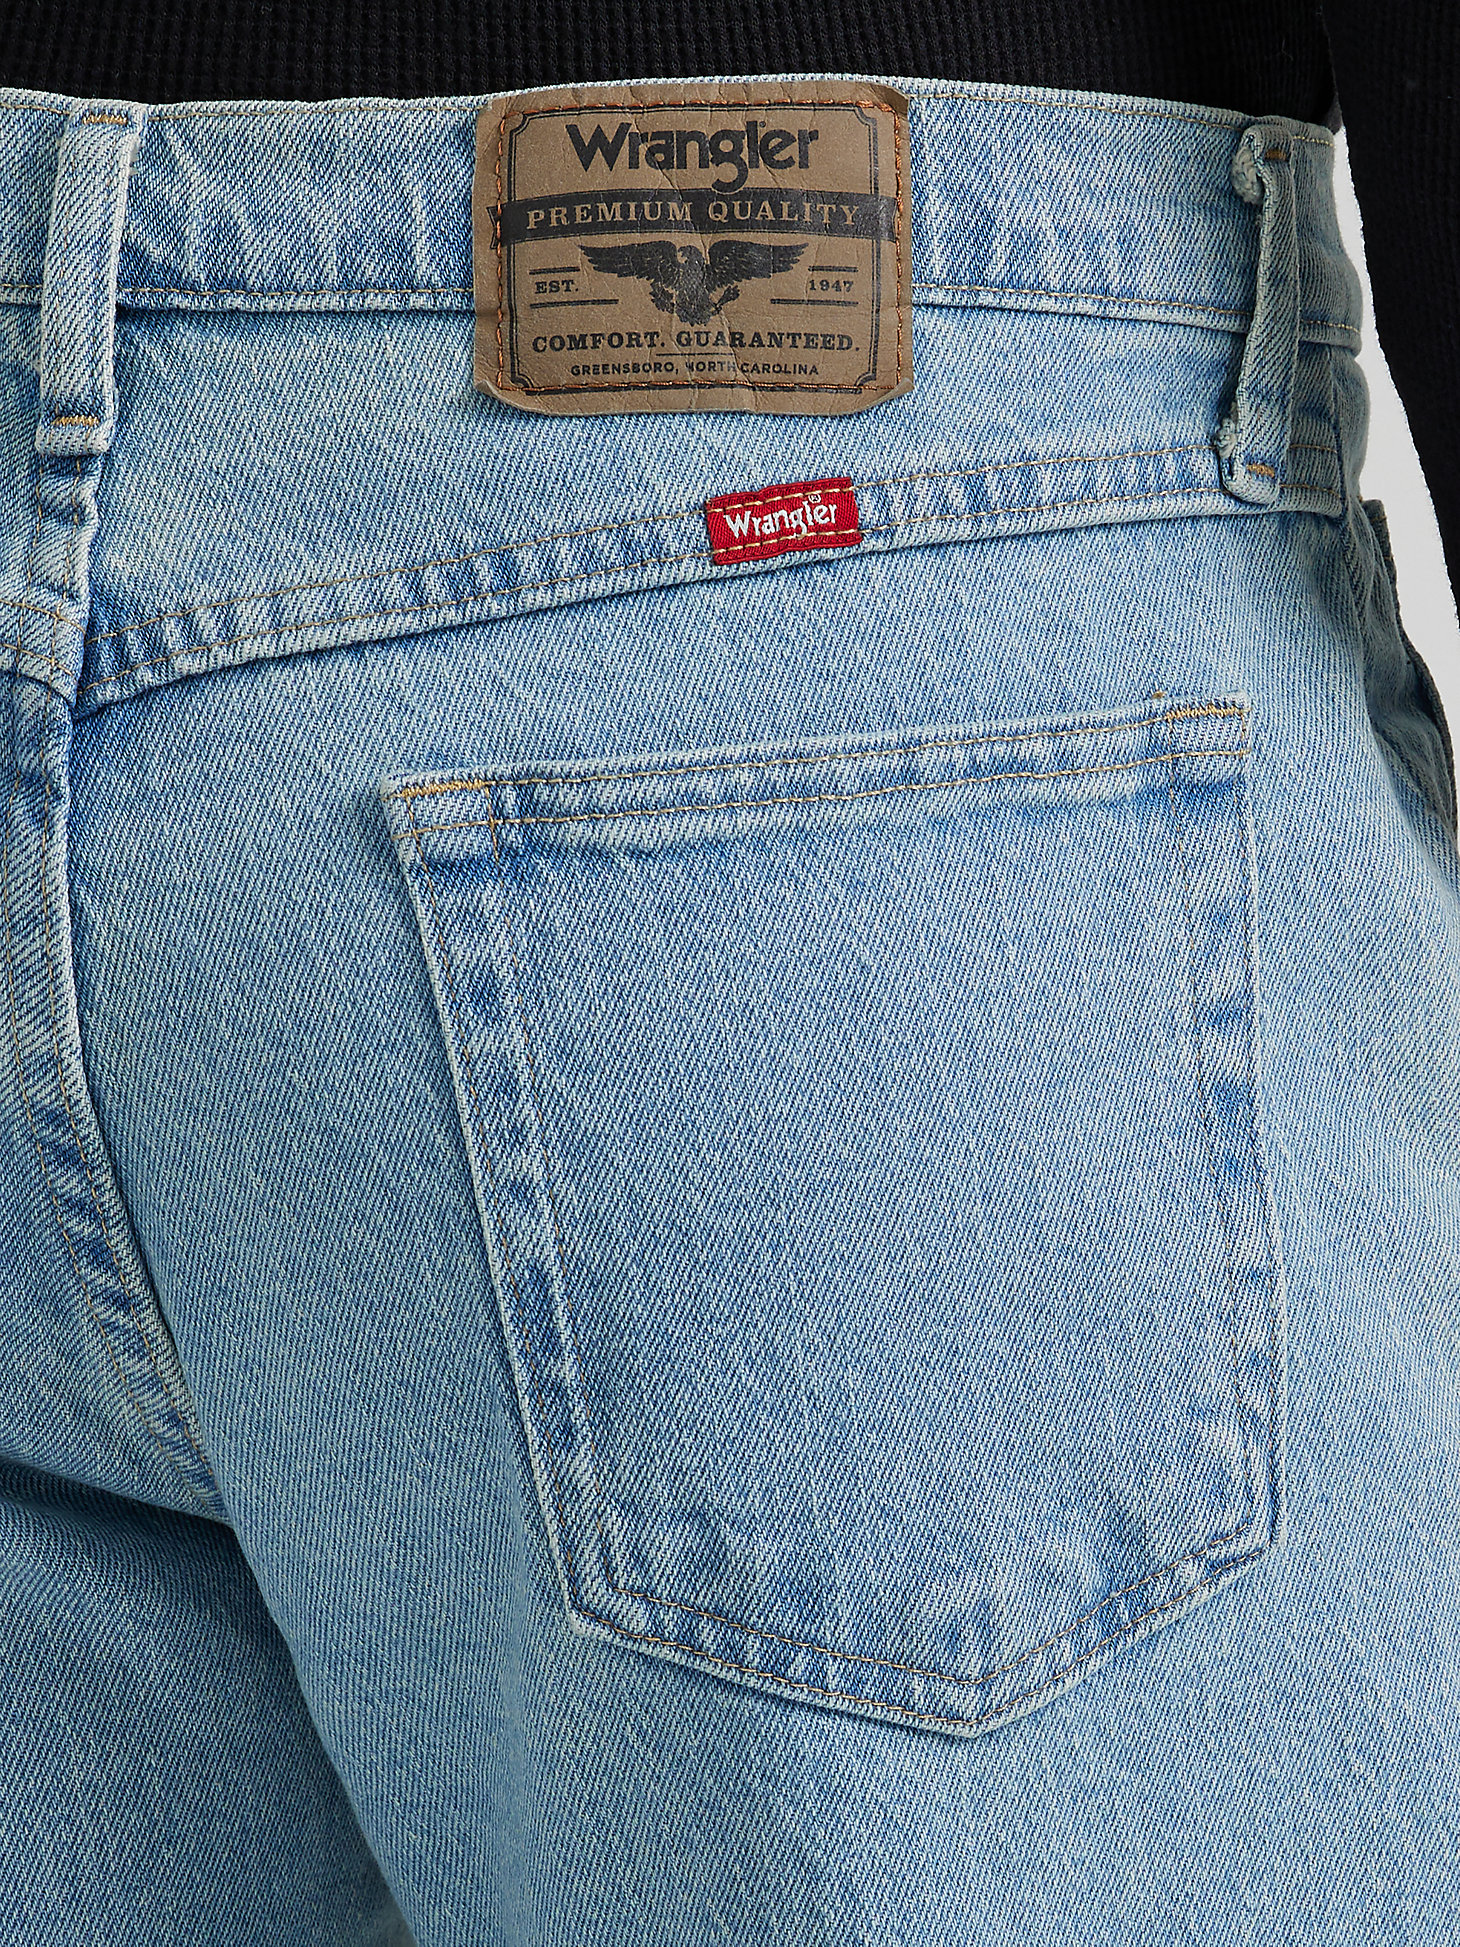 Wrangler® Five Star Premium Denim Flex for Comfort Relaxed Fit Jean in Vintage Blue alternative view 2